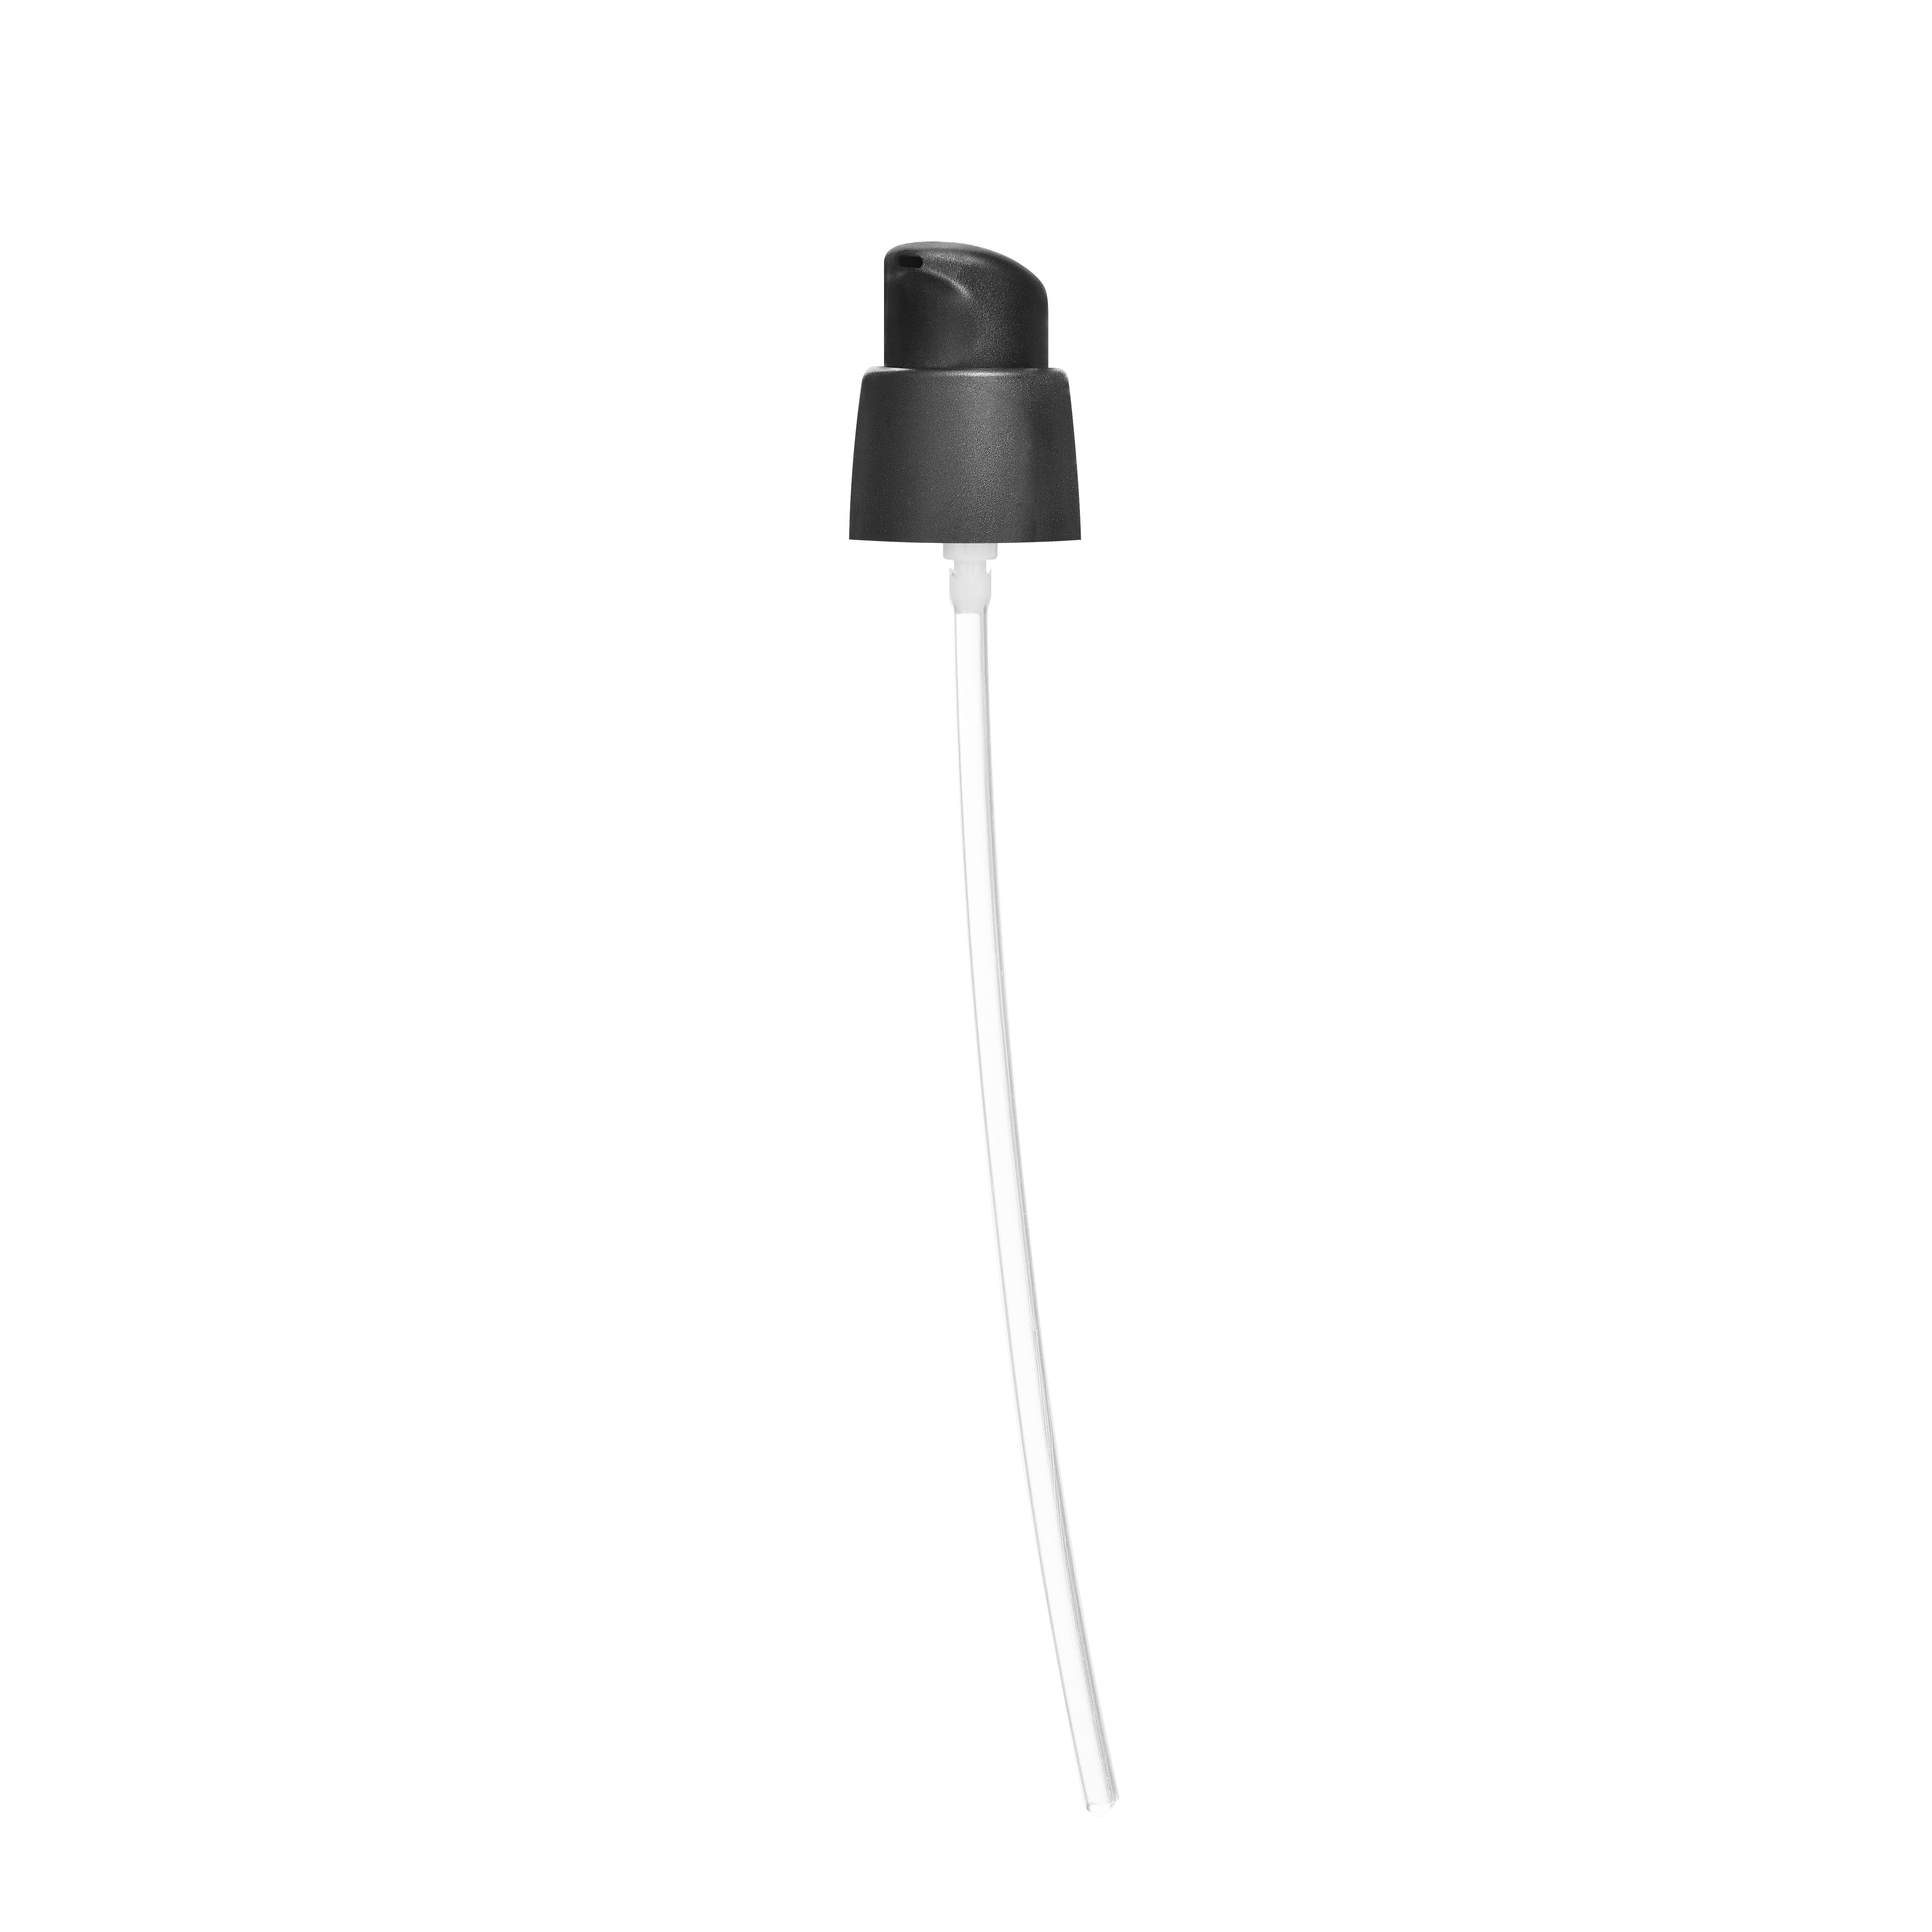 Lotion pump Evolution 18/400, PP, black, matte finish, dose 0.15ml, black security clip (Azalea 30)